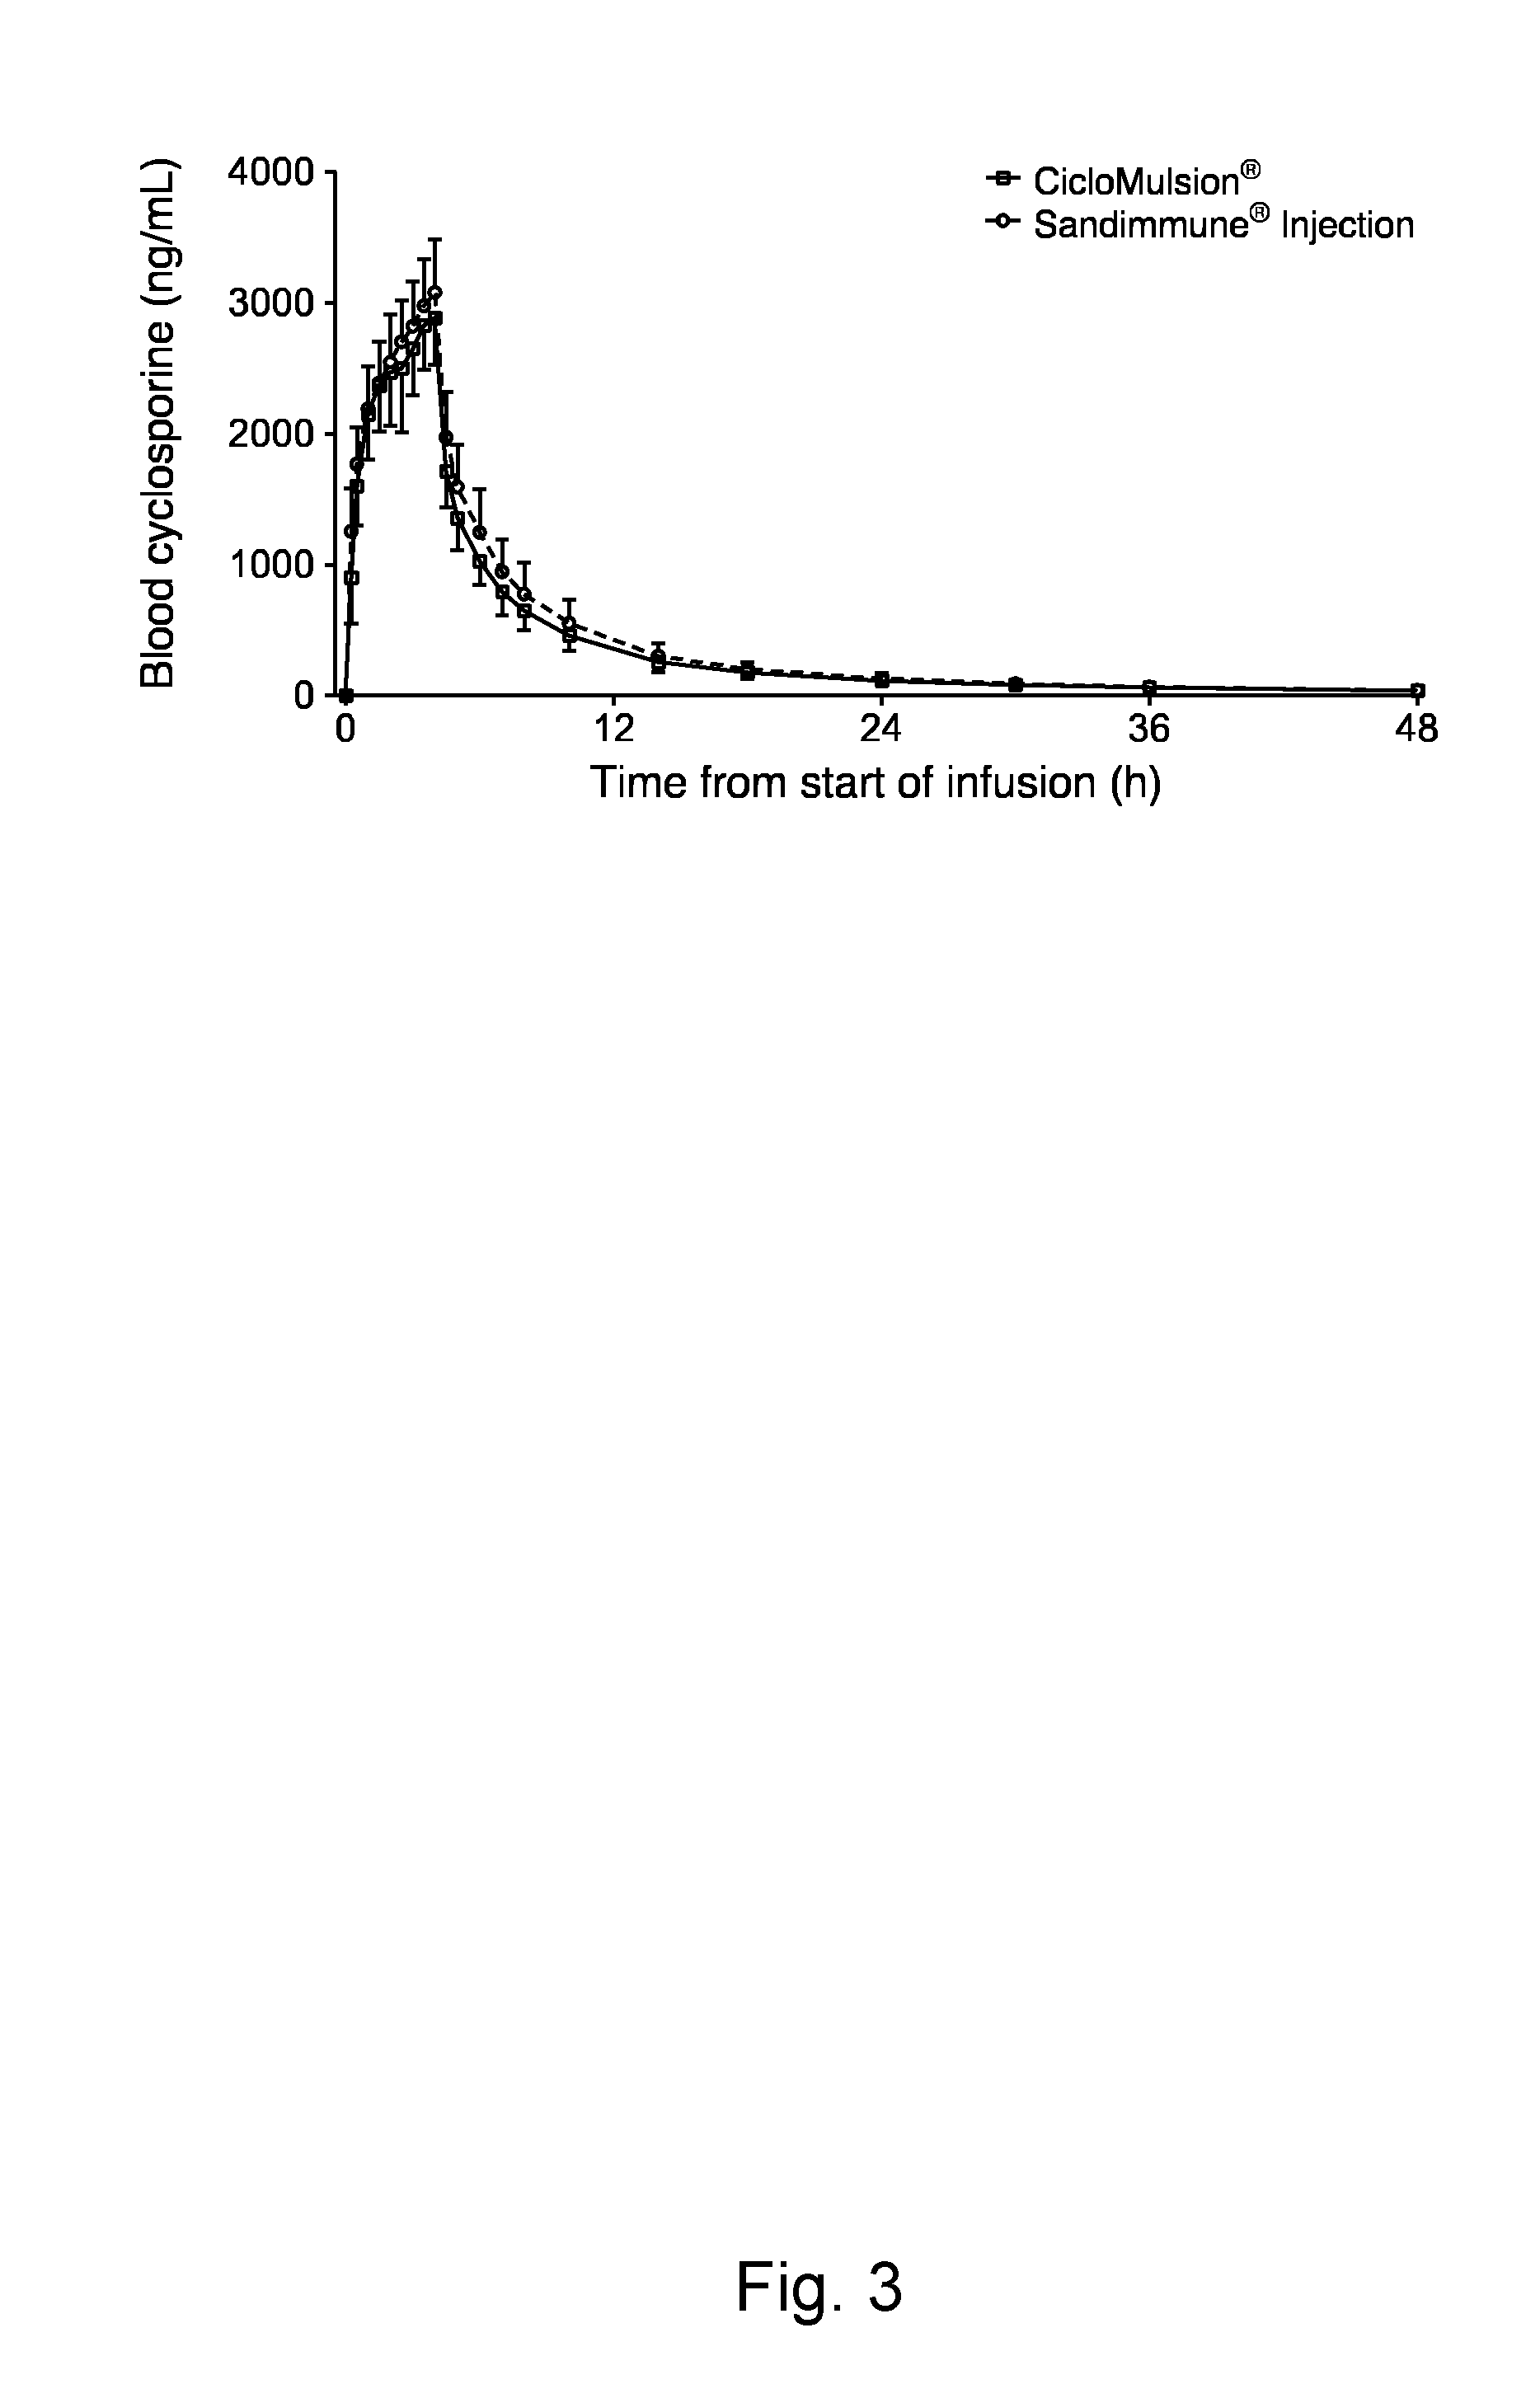 Cyclosporine emulsion